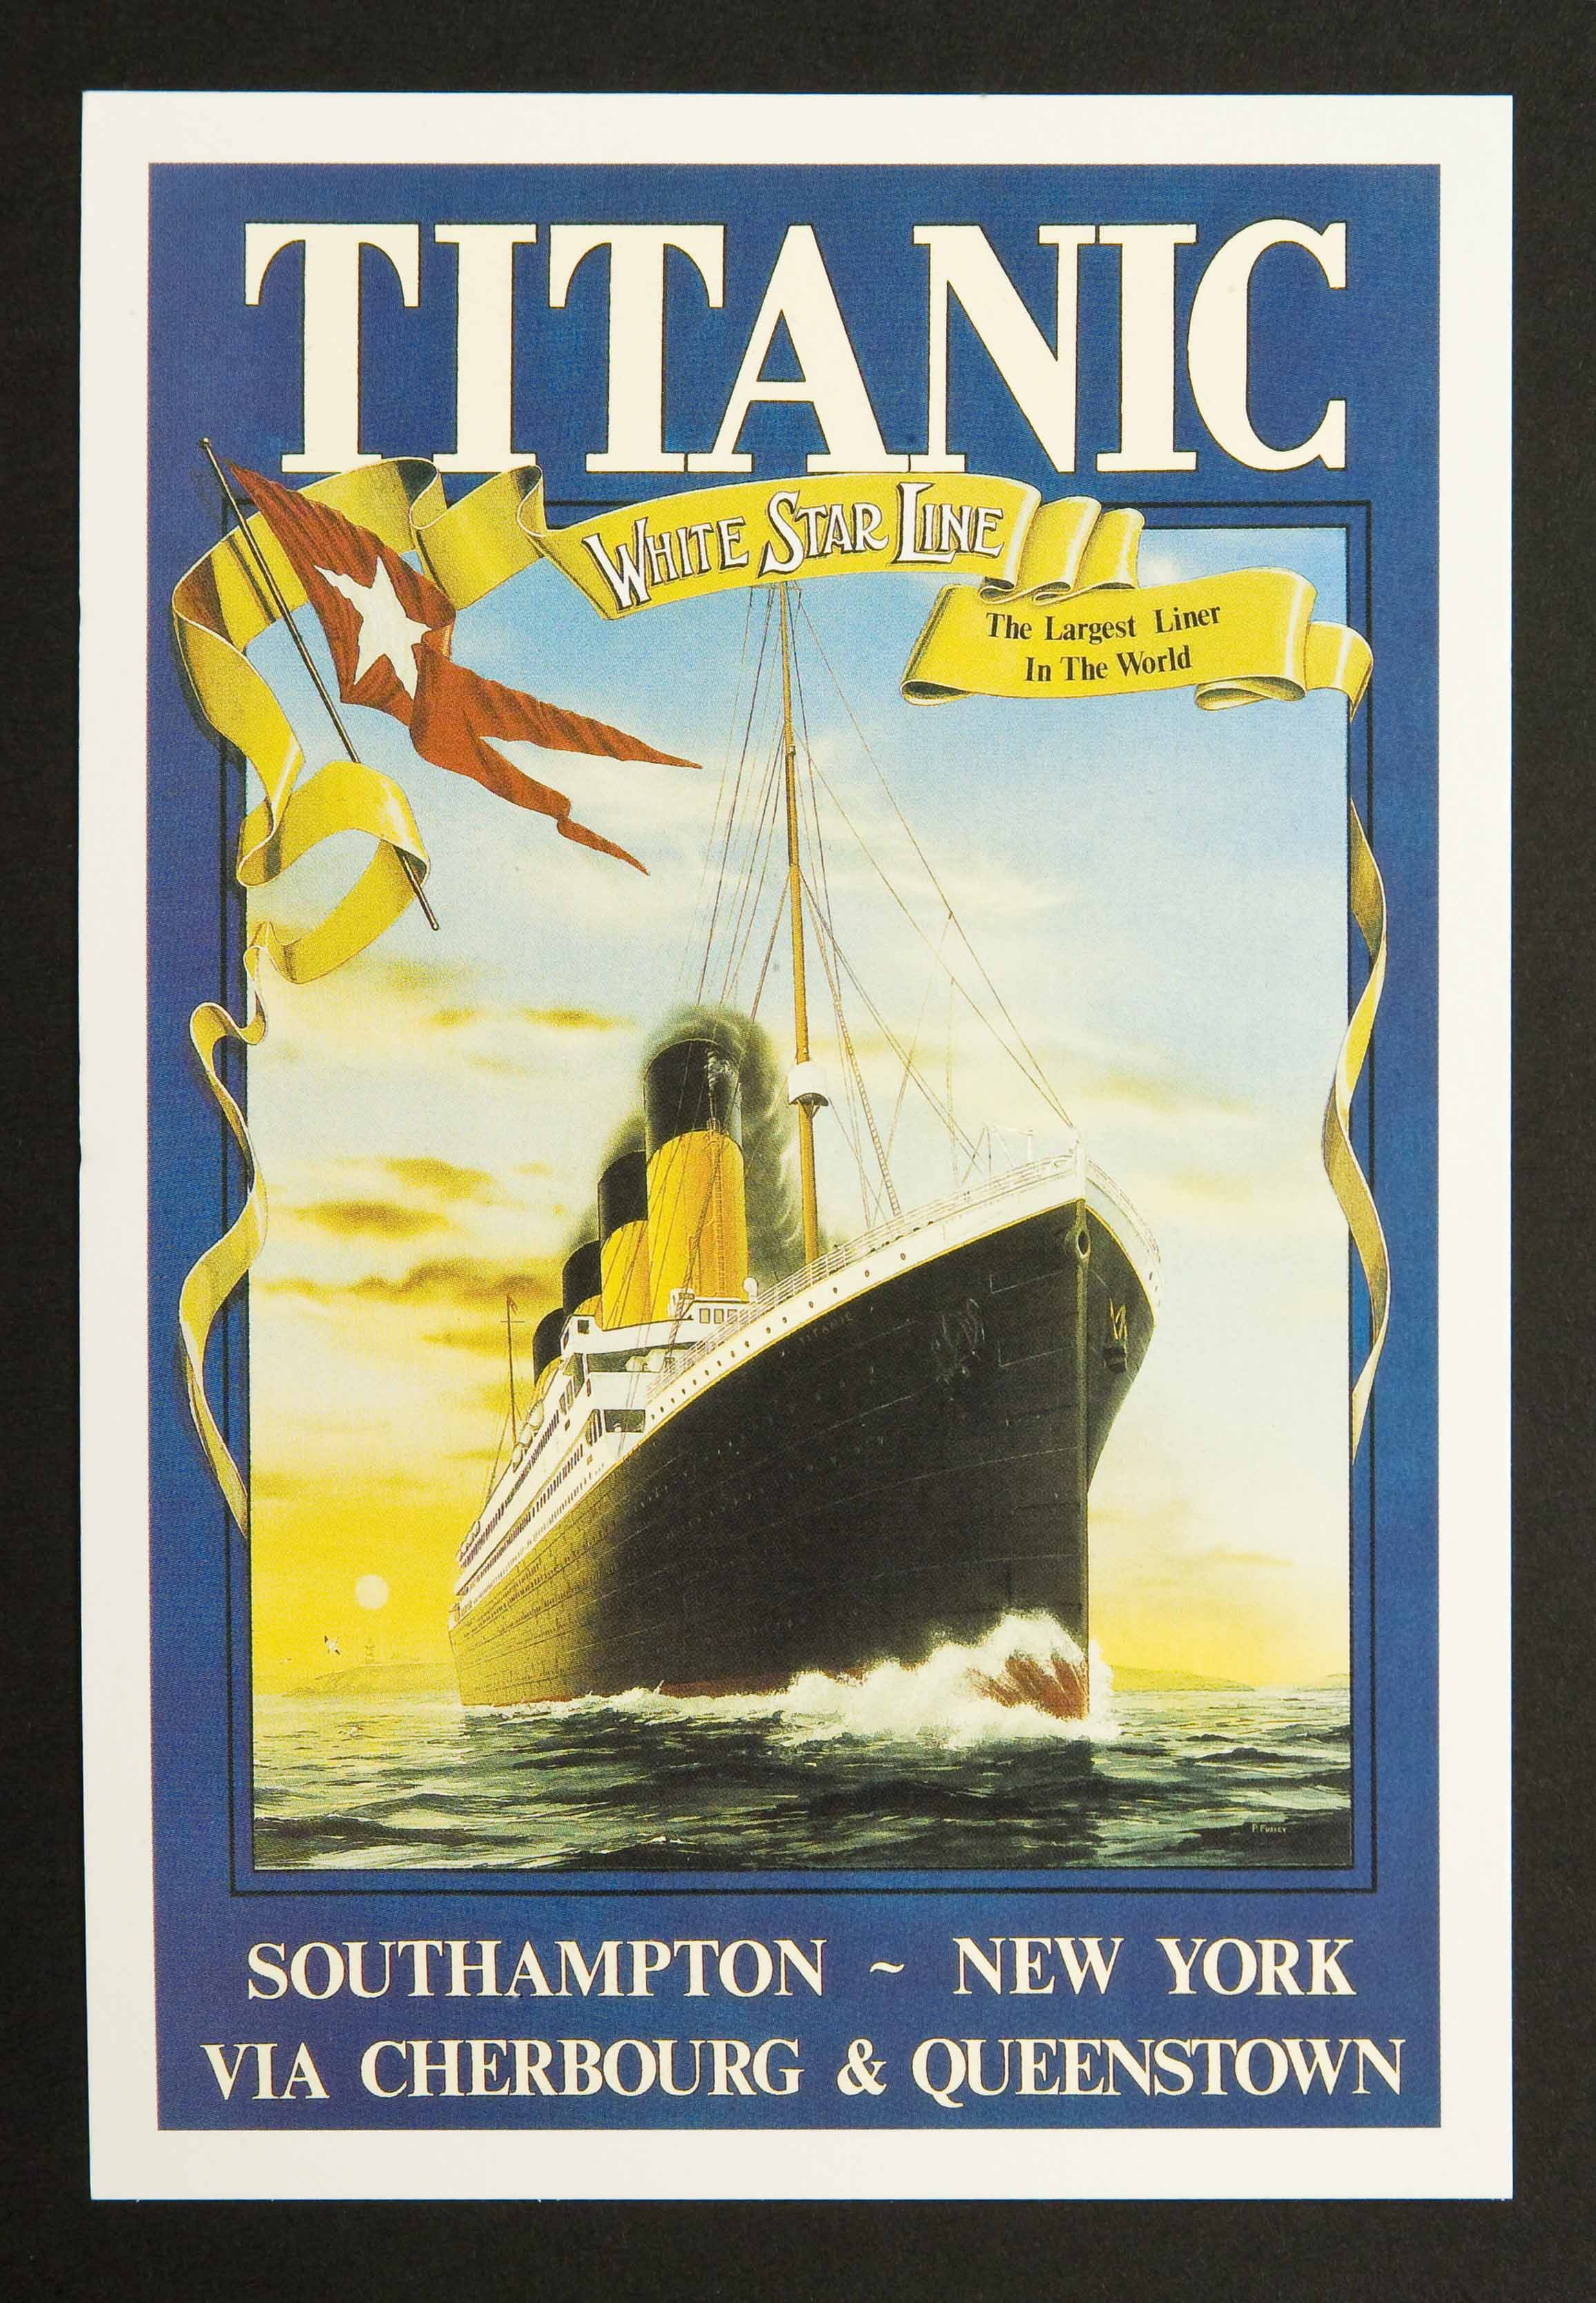 Titanic - White Star Line Sunrise Postcards (6)